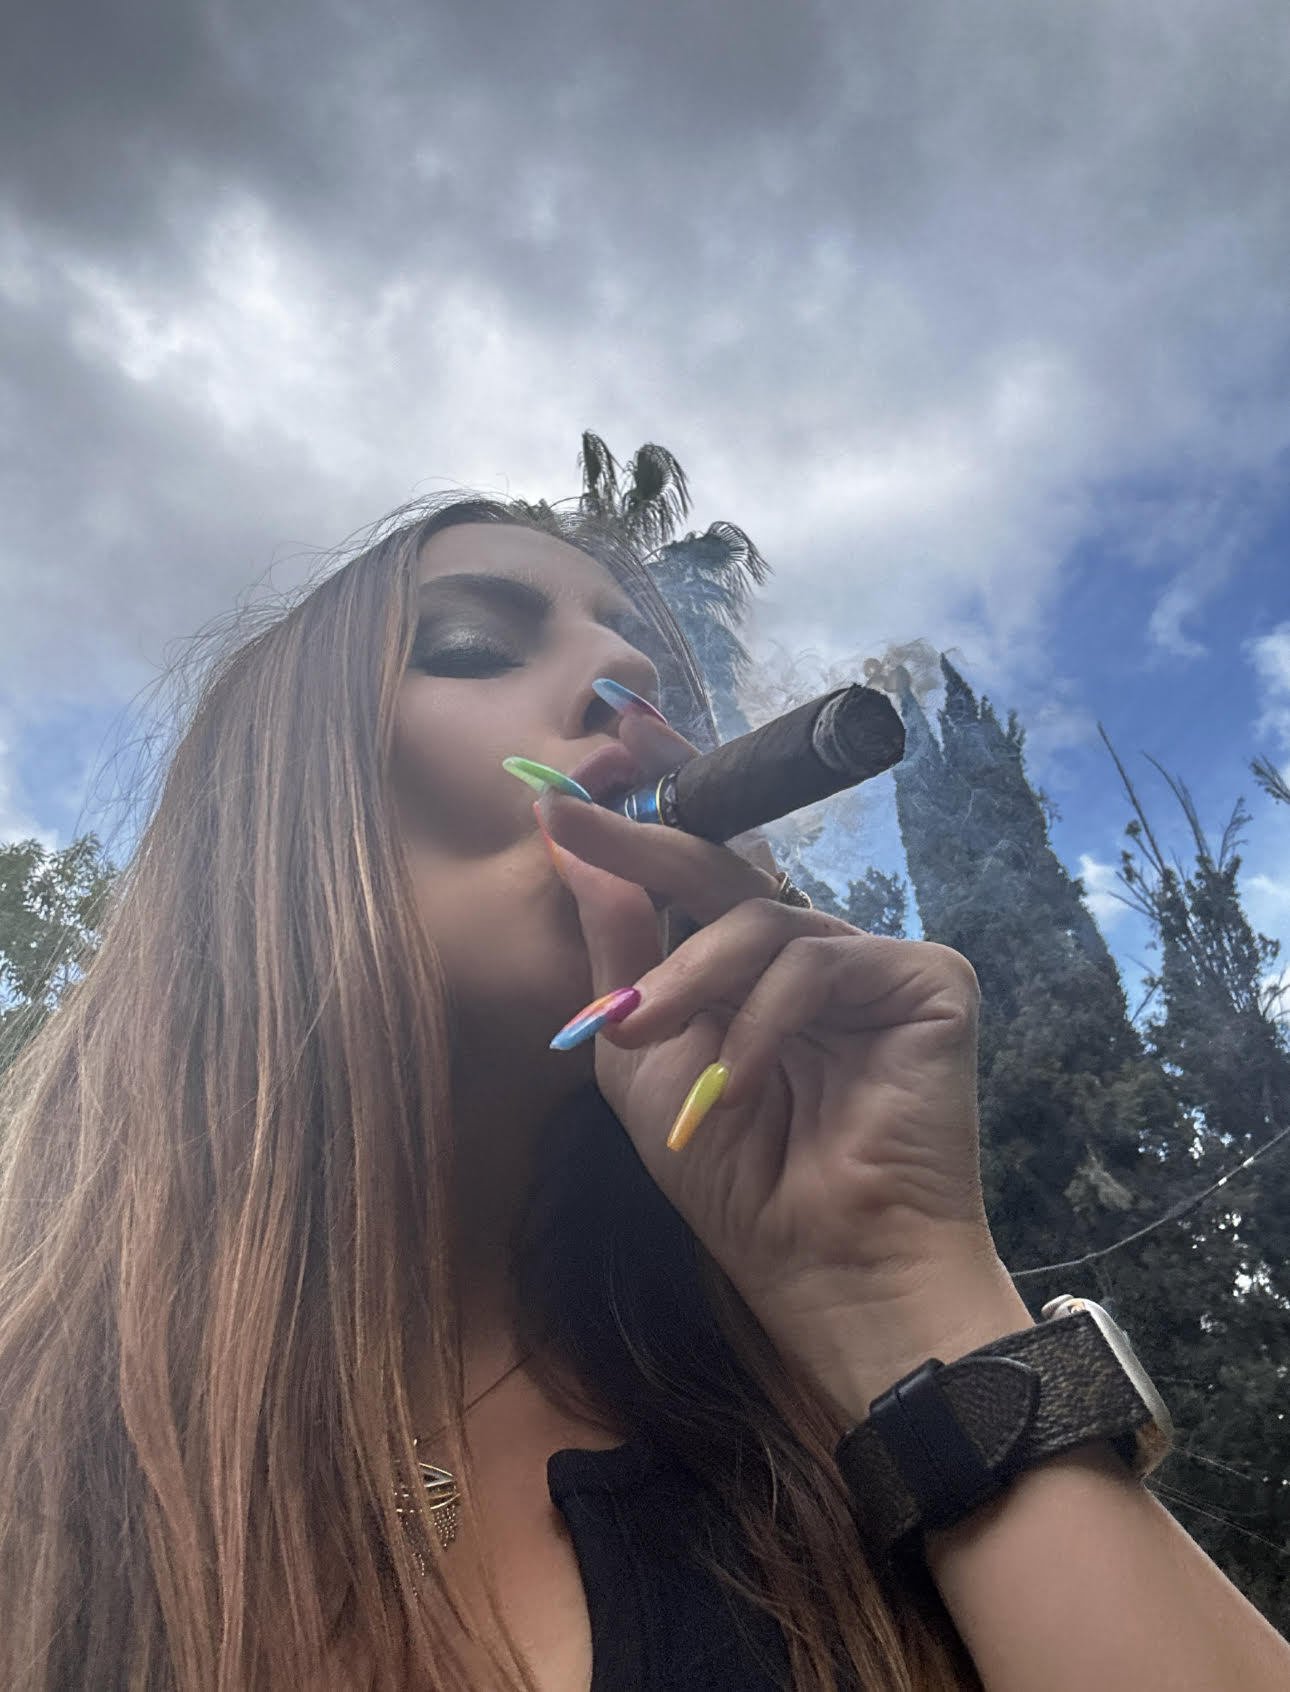 acid-kuba-kuba-maduro cigar review